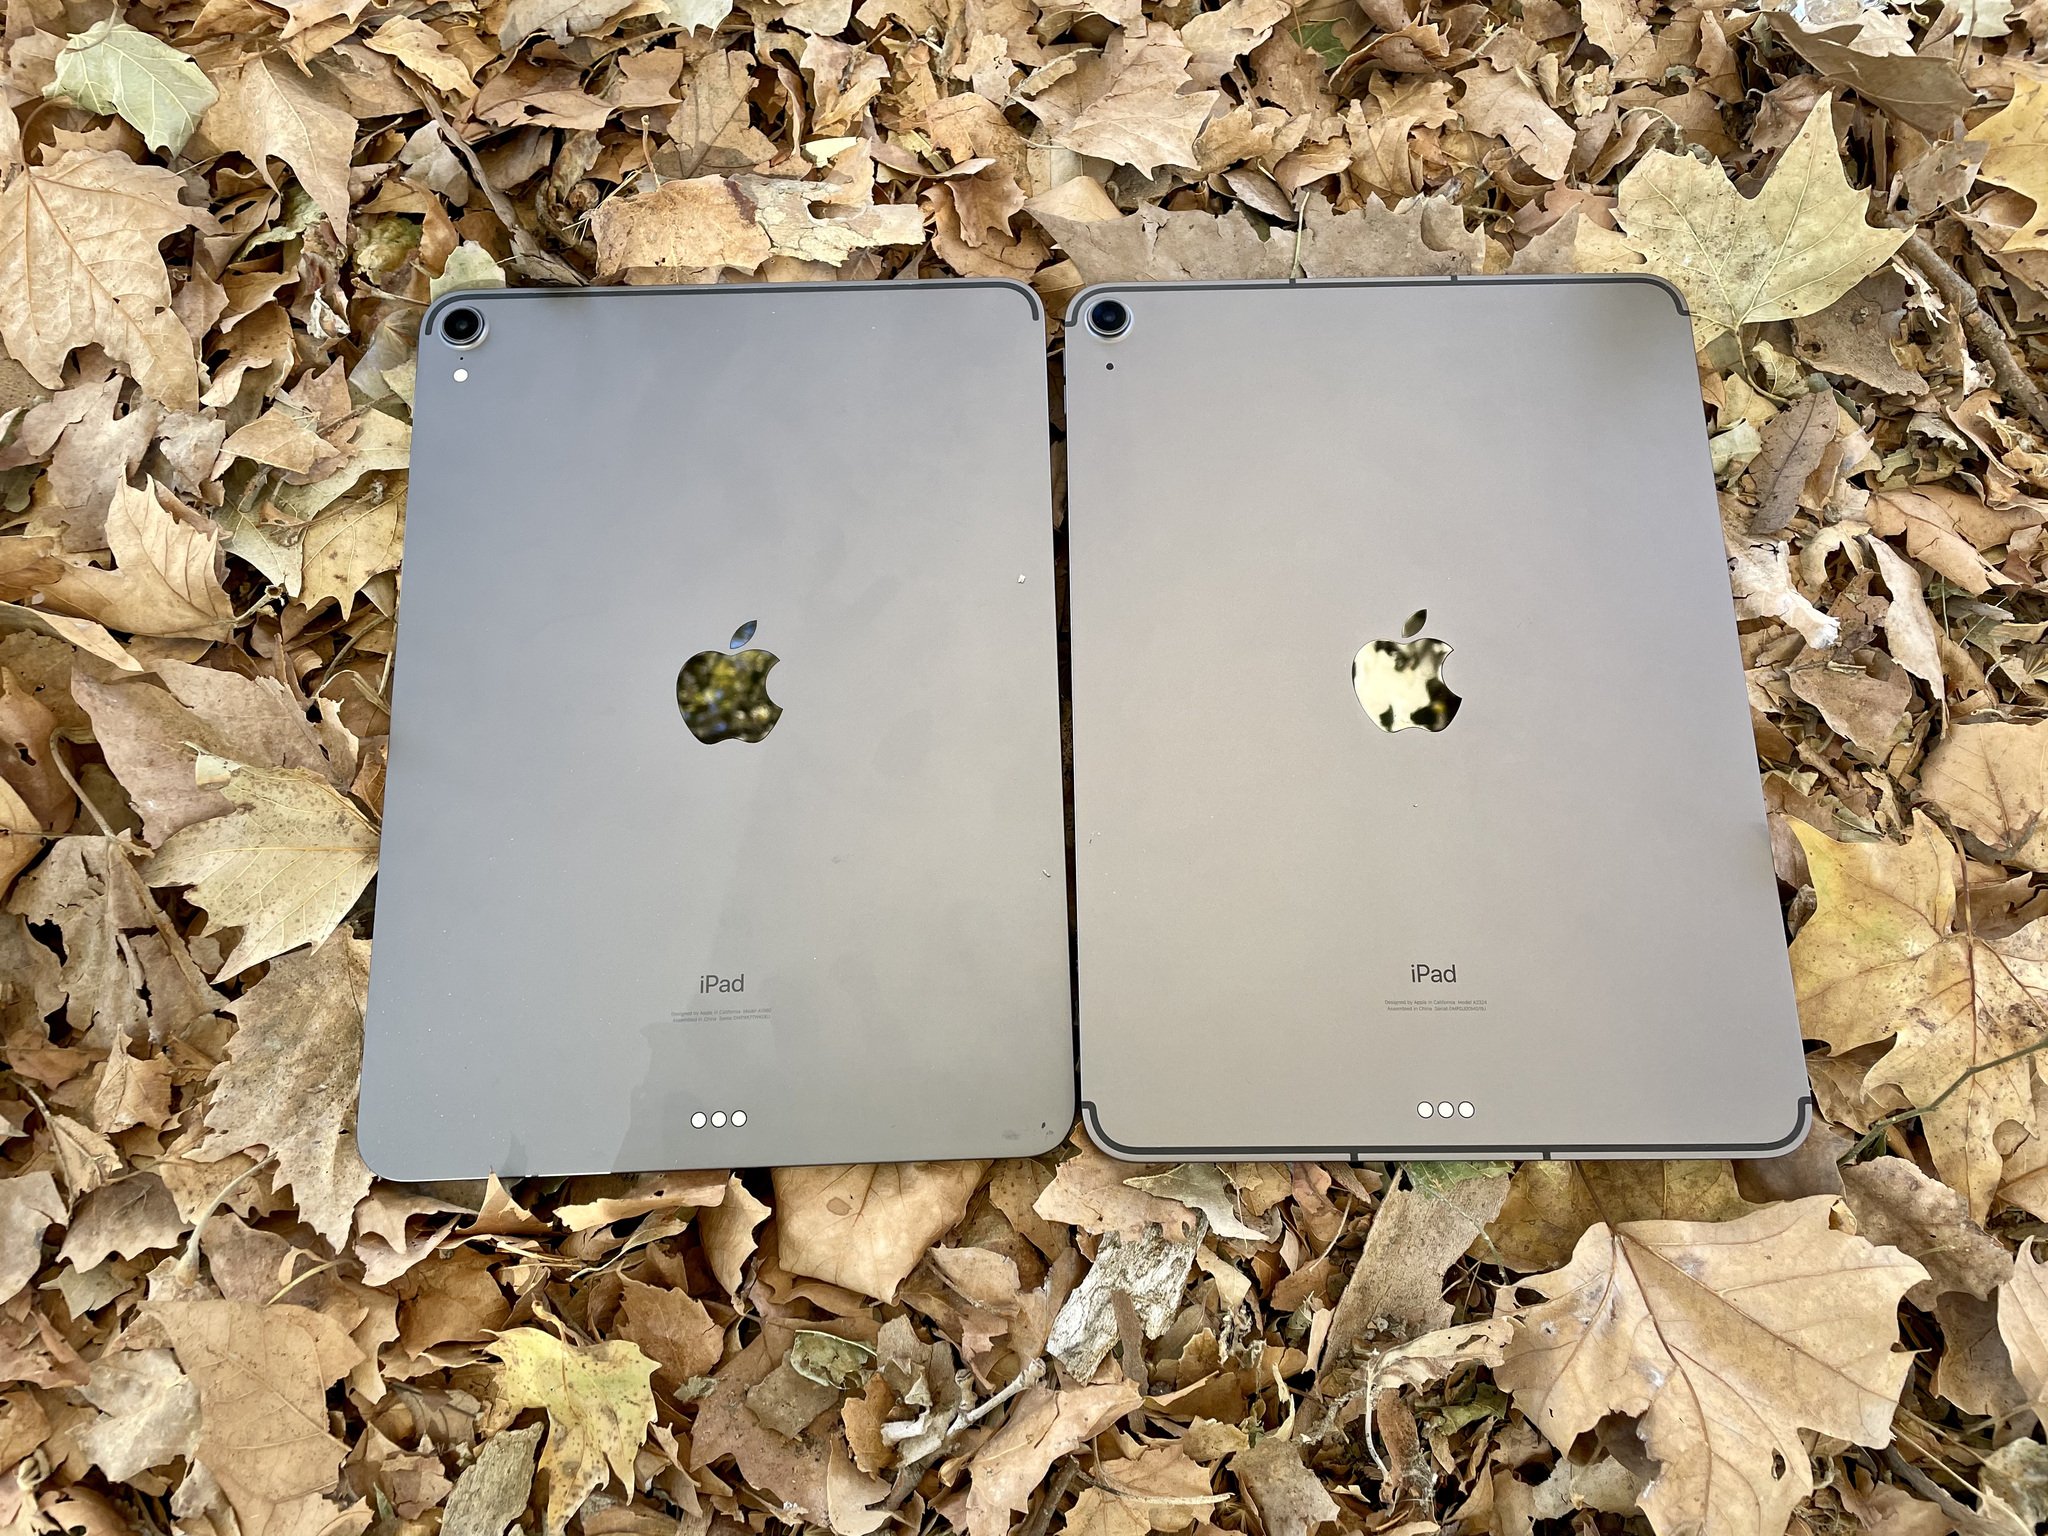 iPad Air 4 and 2018 iPad Pro backside comparison